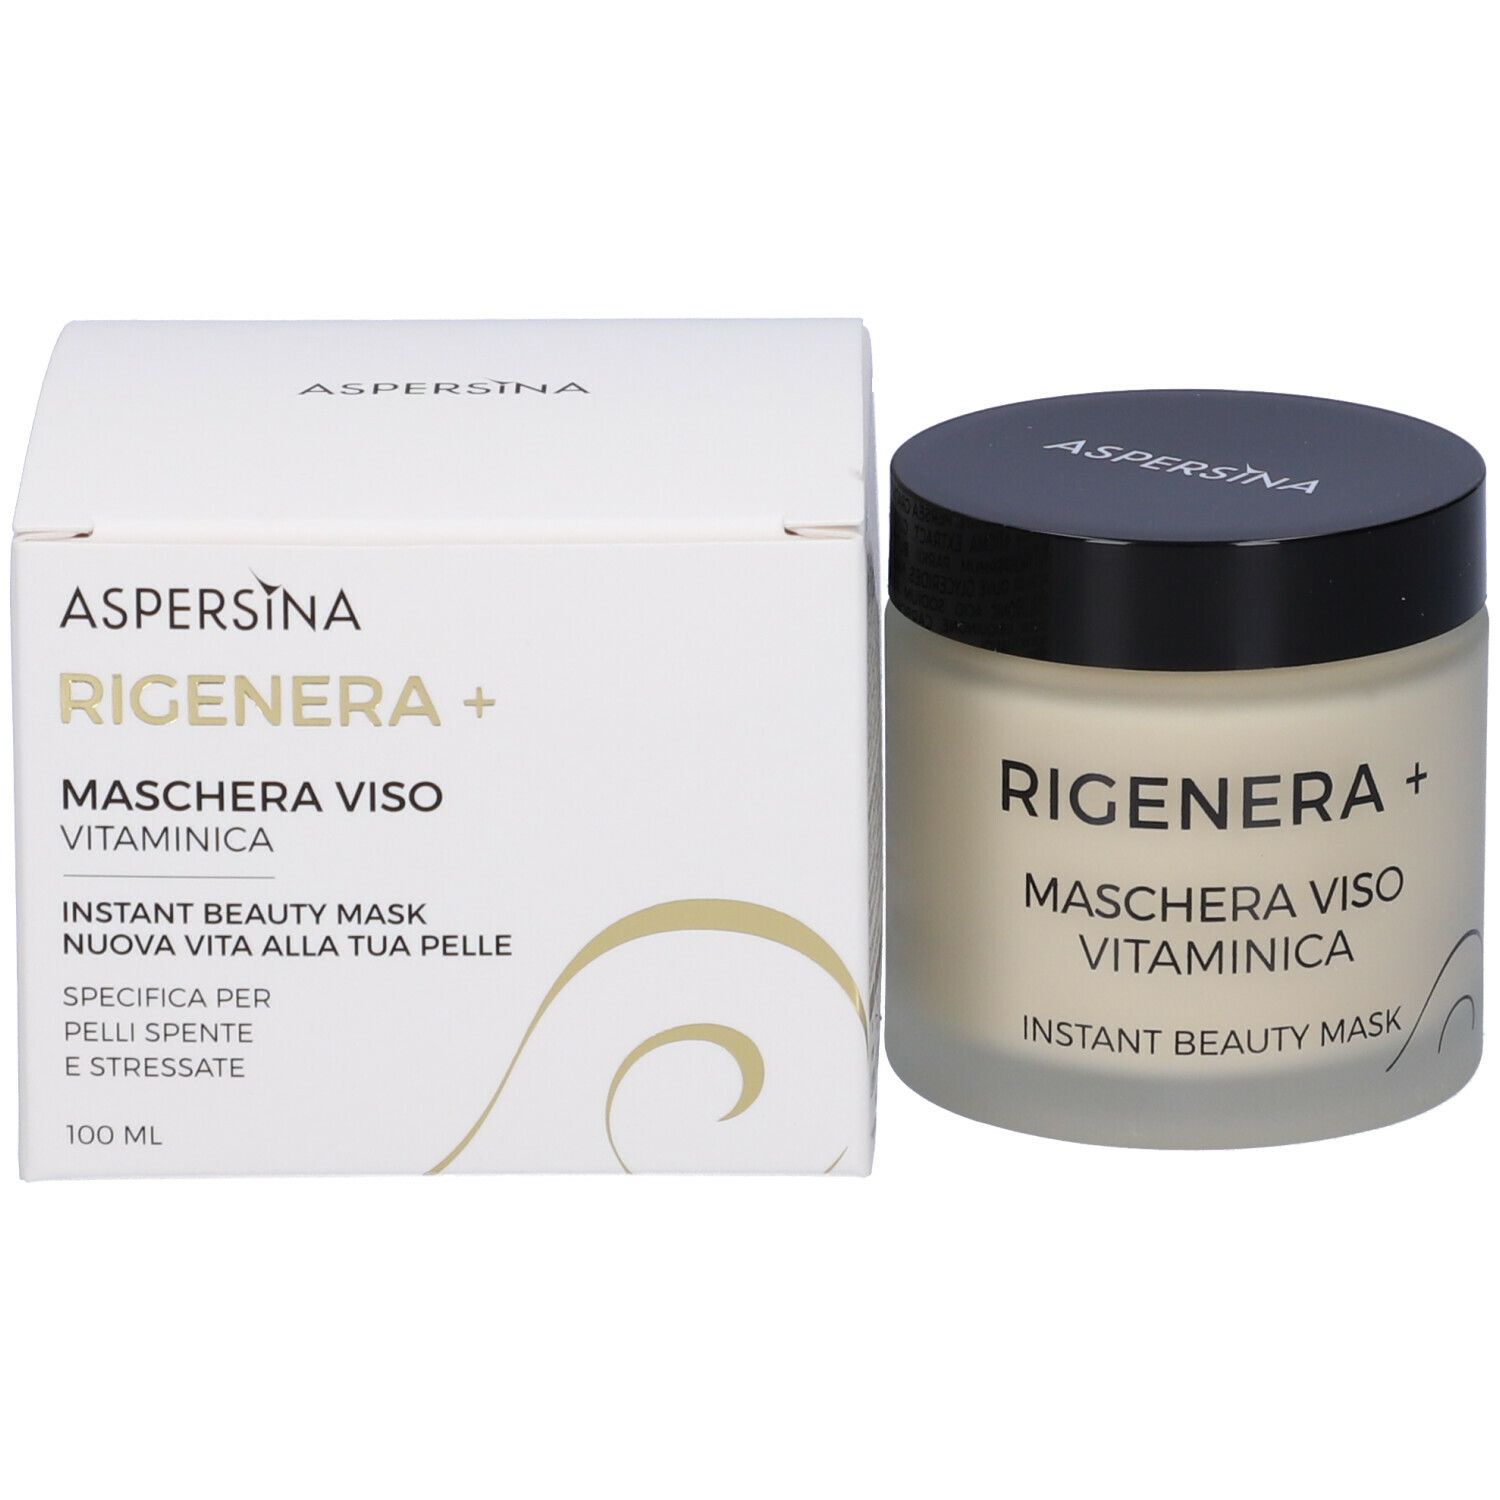 Aspersina Rigenera+ Maschera Viso Vitaminica